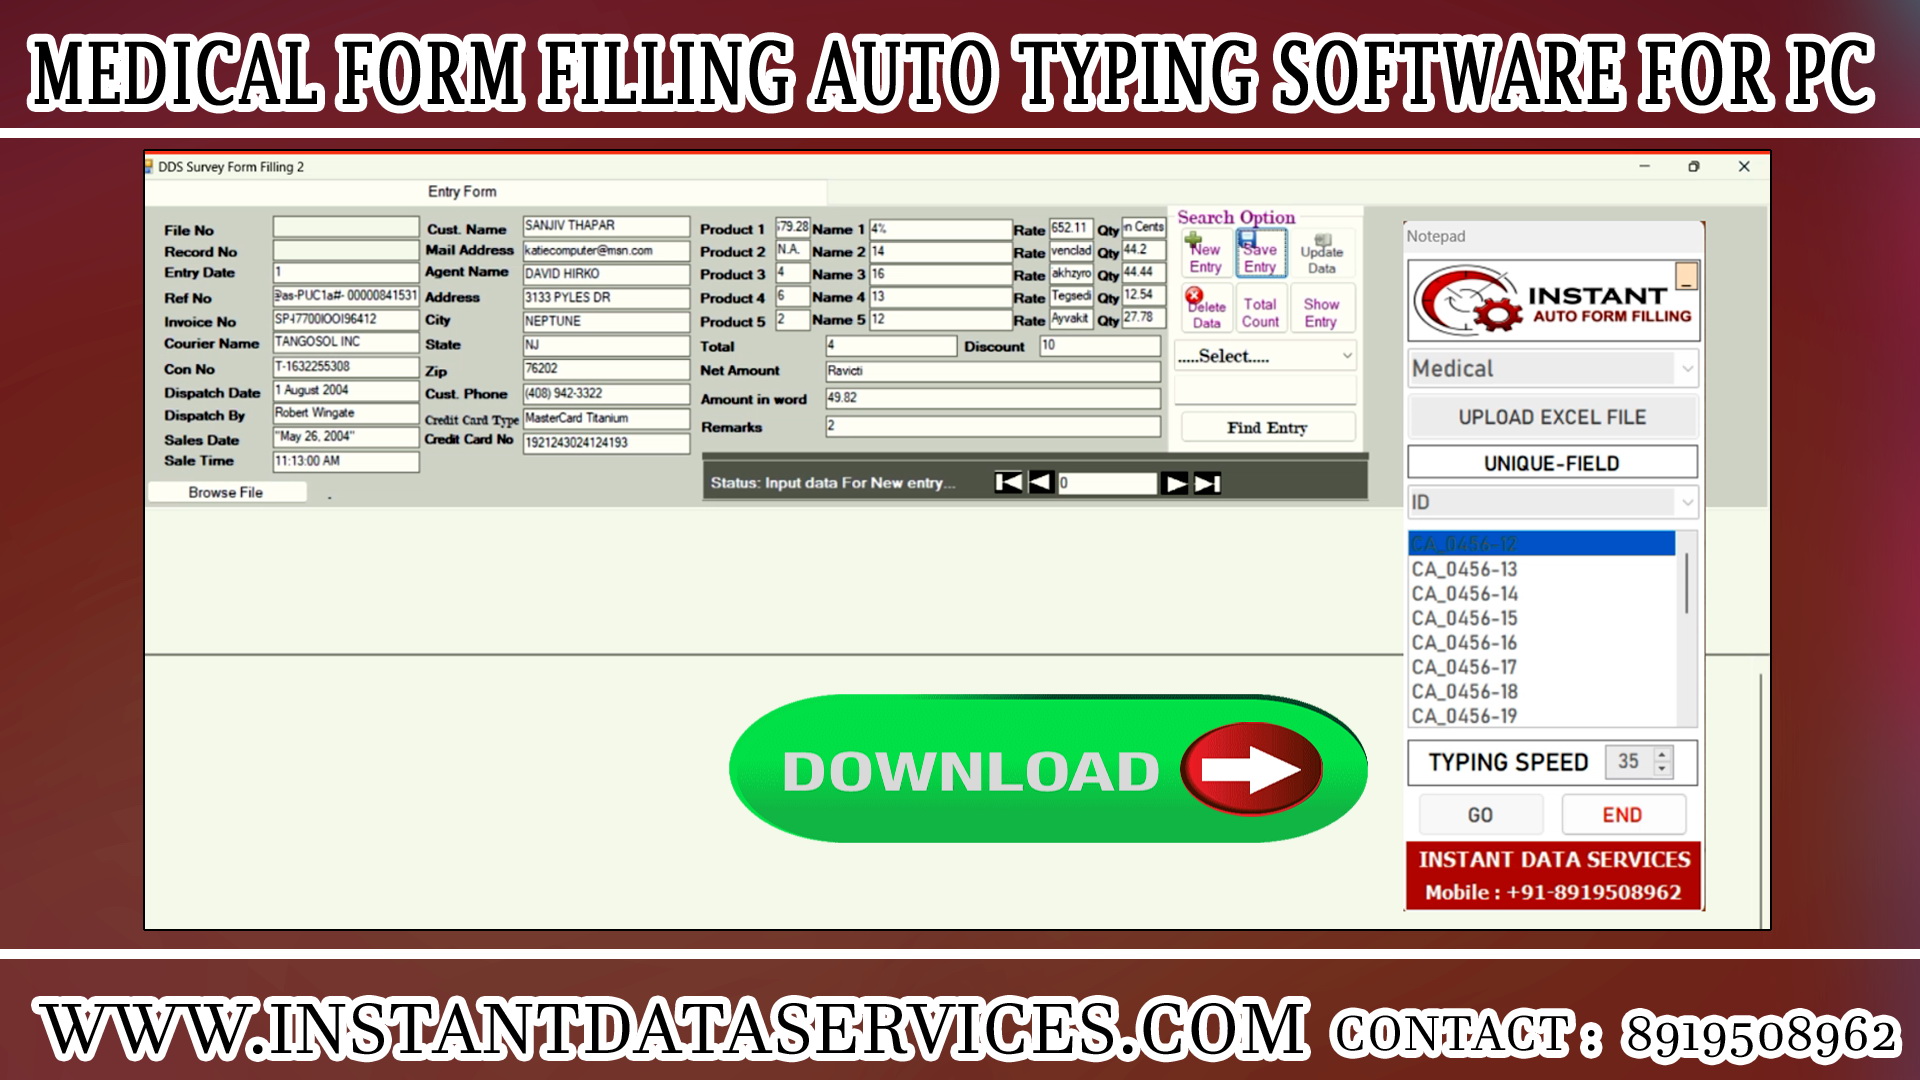 Medical Form Filling Auto Typer Software